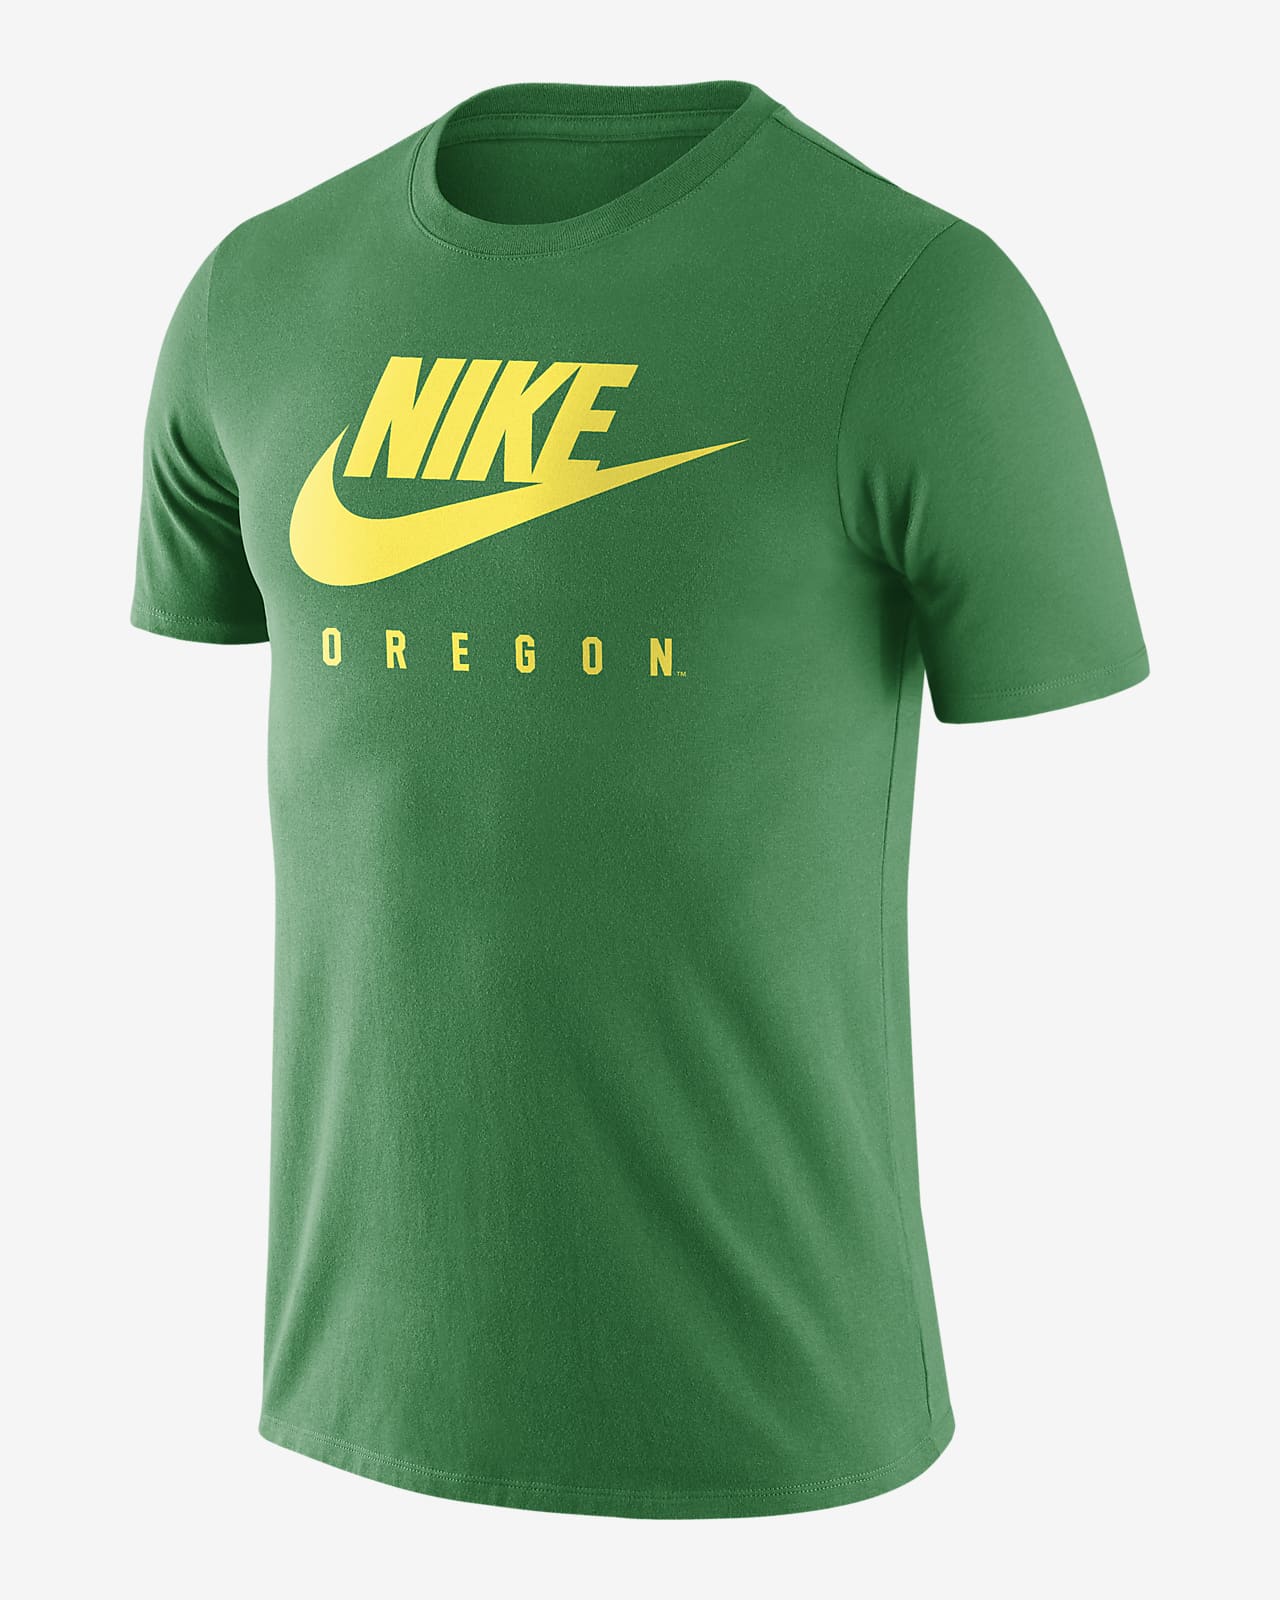 Playera para hombre Nike College (Oregon)